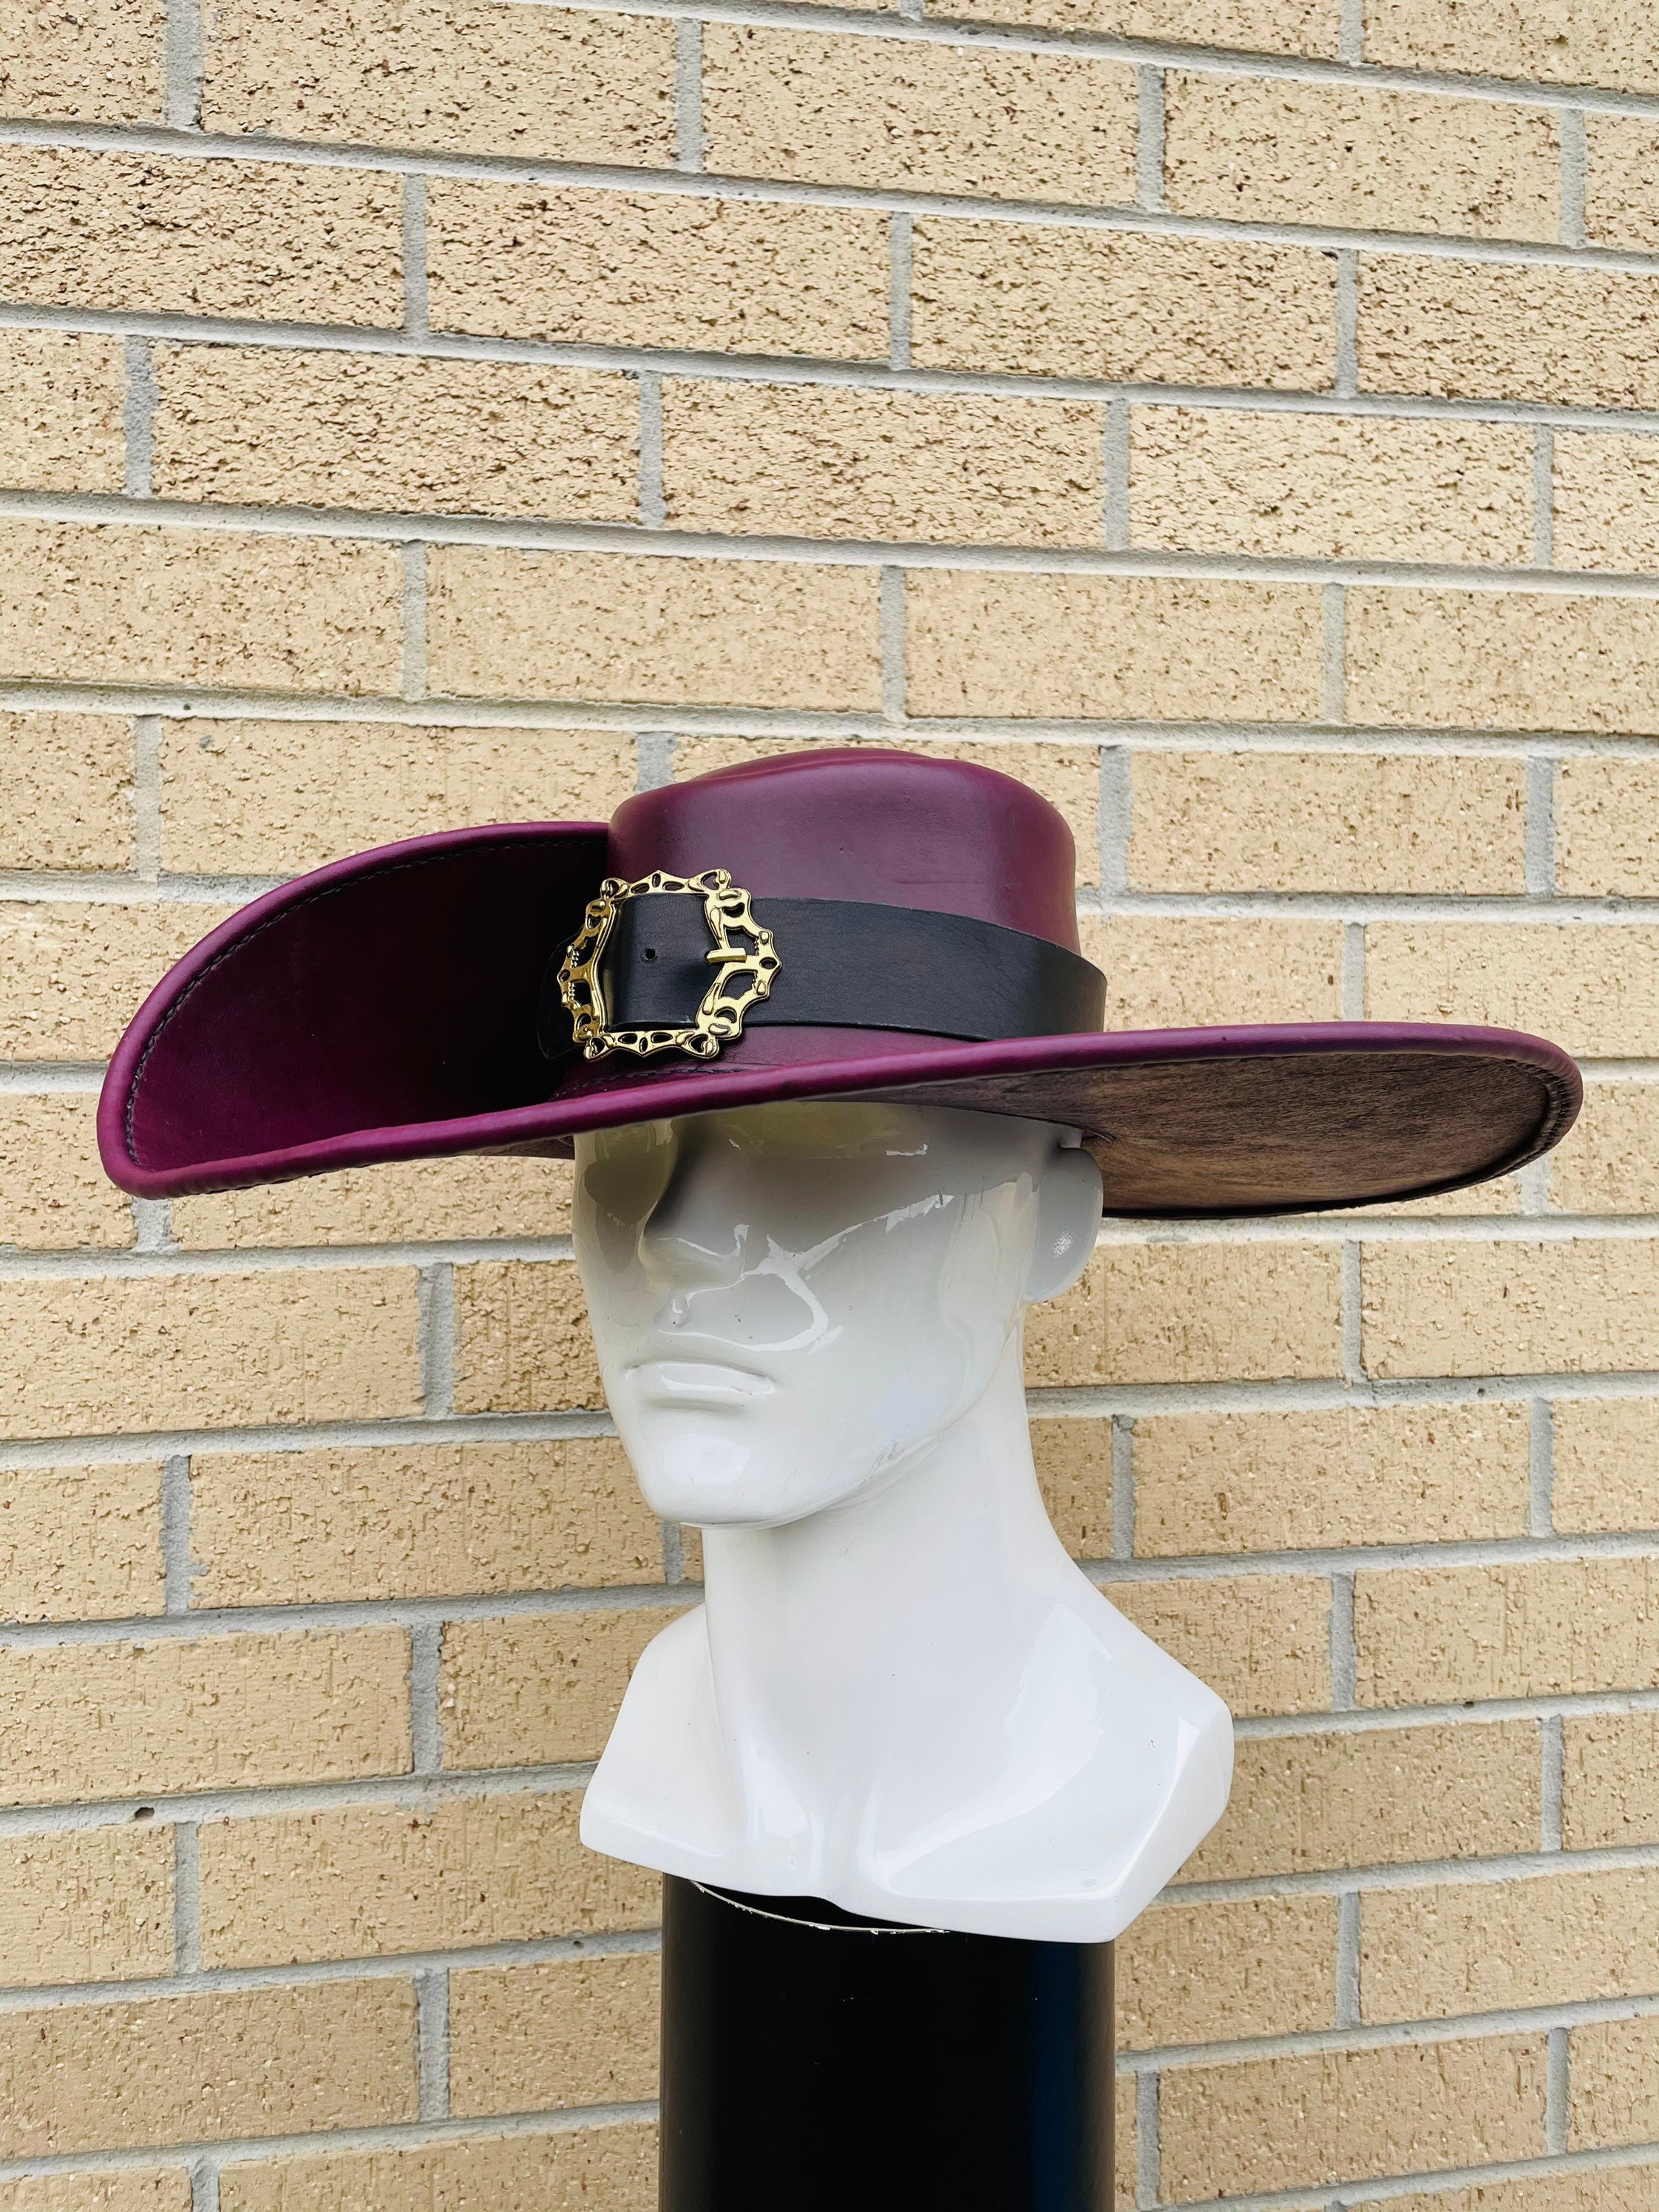 Musketeer leather hat by akinra-workshop on DeviantArt